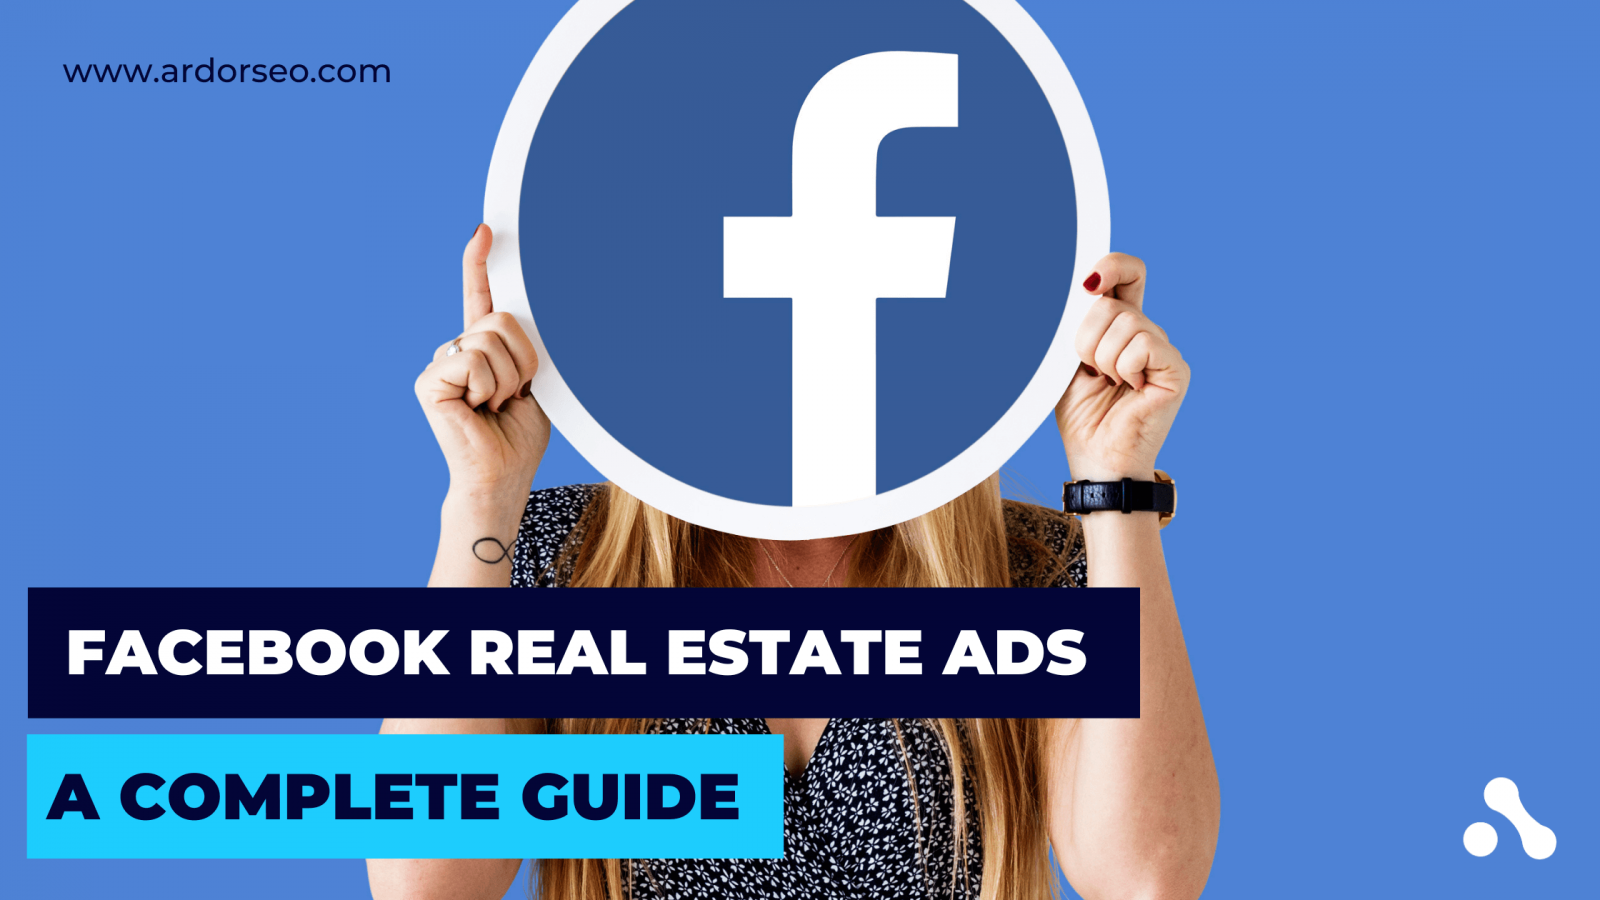 Facebook_Real_Estate_Ads_A_Complete_Guide_for_Realtors